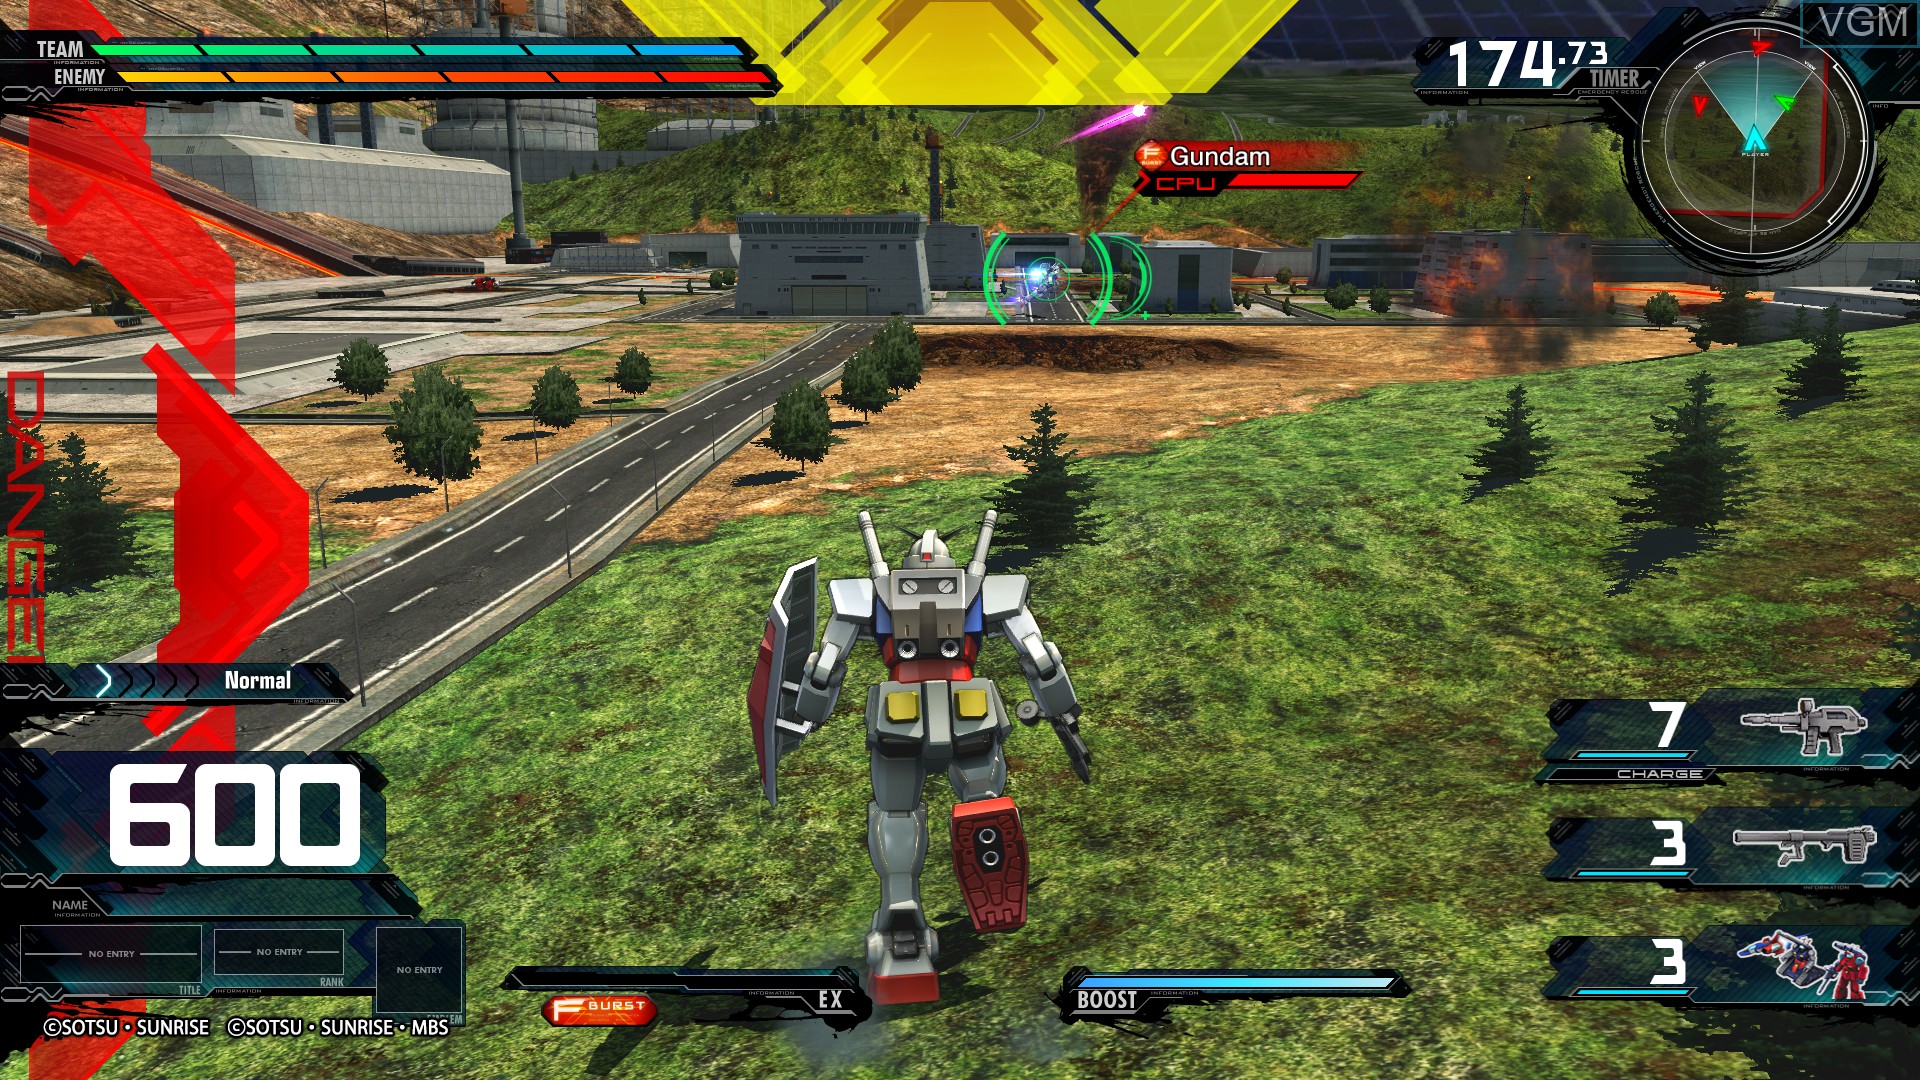 Mobile Suit Gundam - Extreme VS. MaxiBoost ON